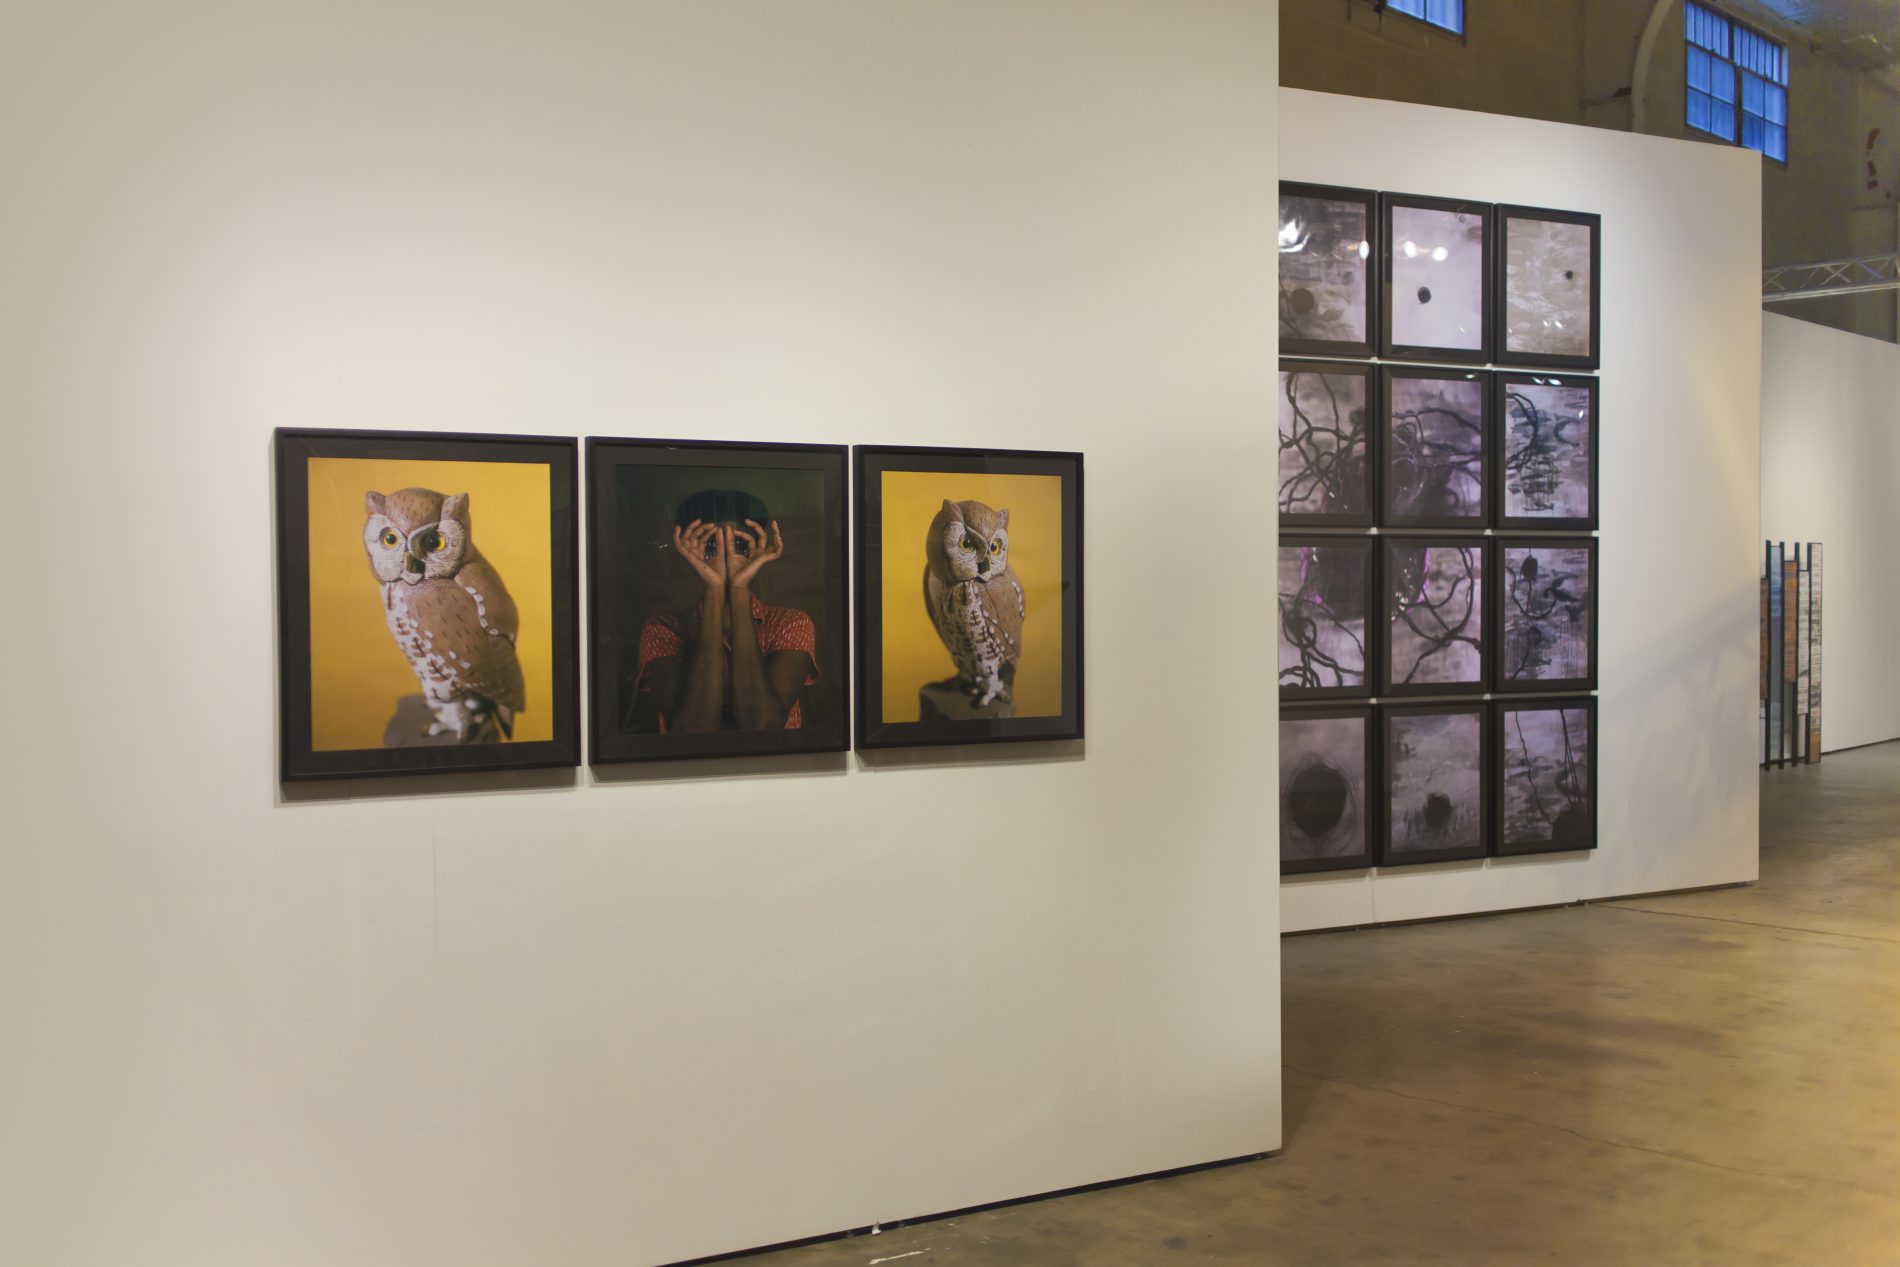   María Magdalena Campos-Pons: If I Were A Poet,  installation view, Gallery Wendi Norris Offsite, 649 Mason Street, San Francisco, CA, January 11 - 28, 2018, photography: Maciek Janicki 